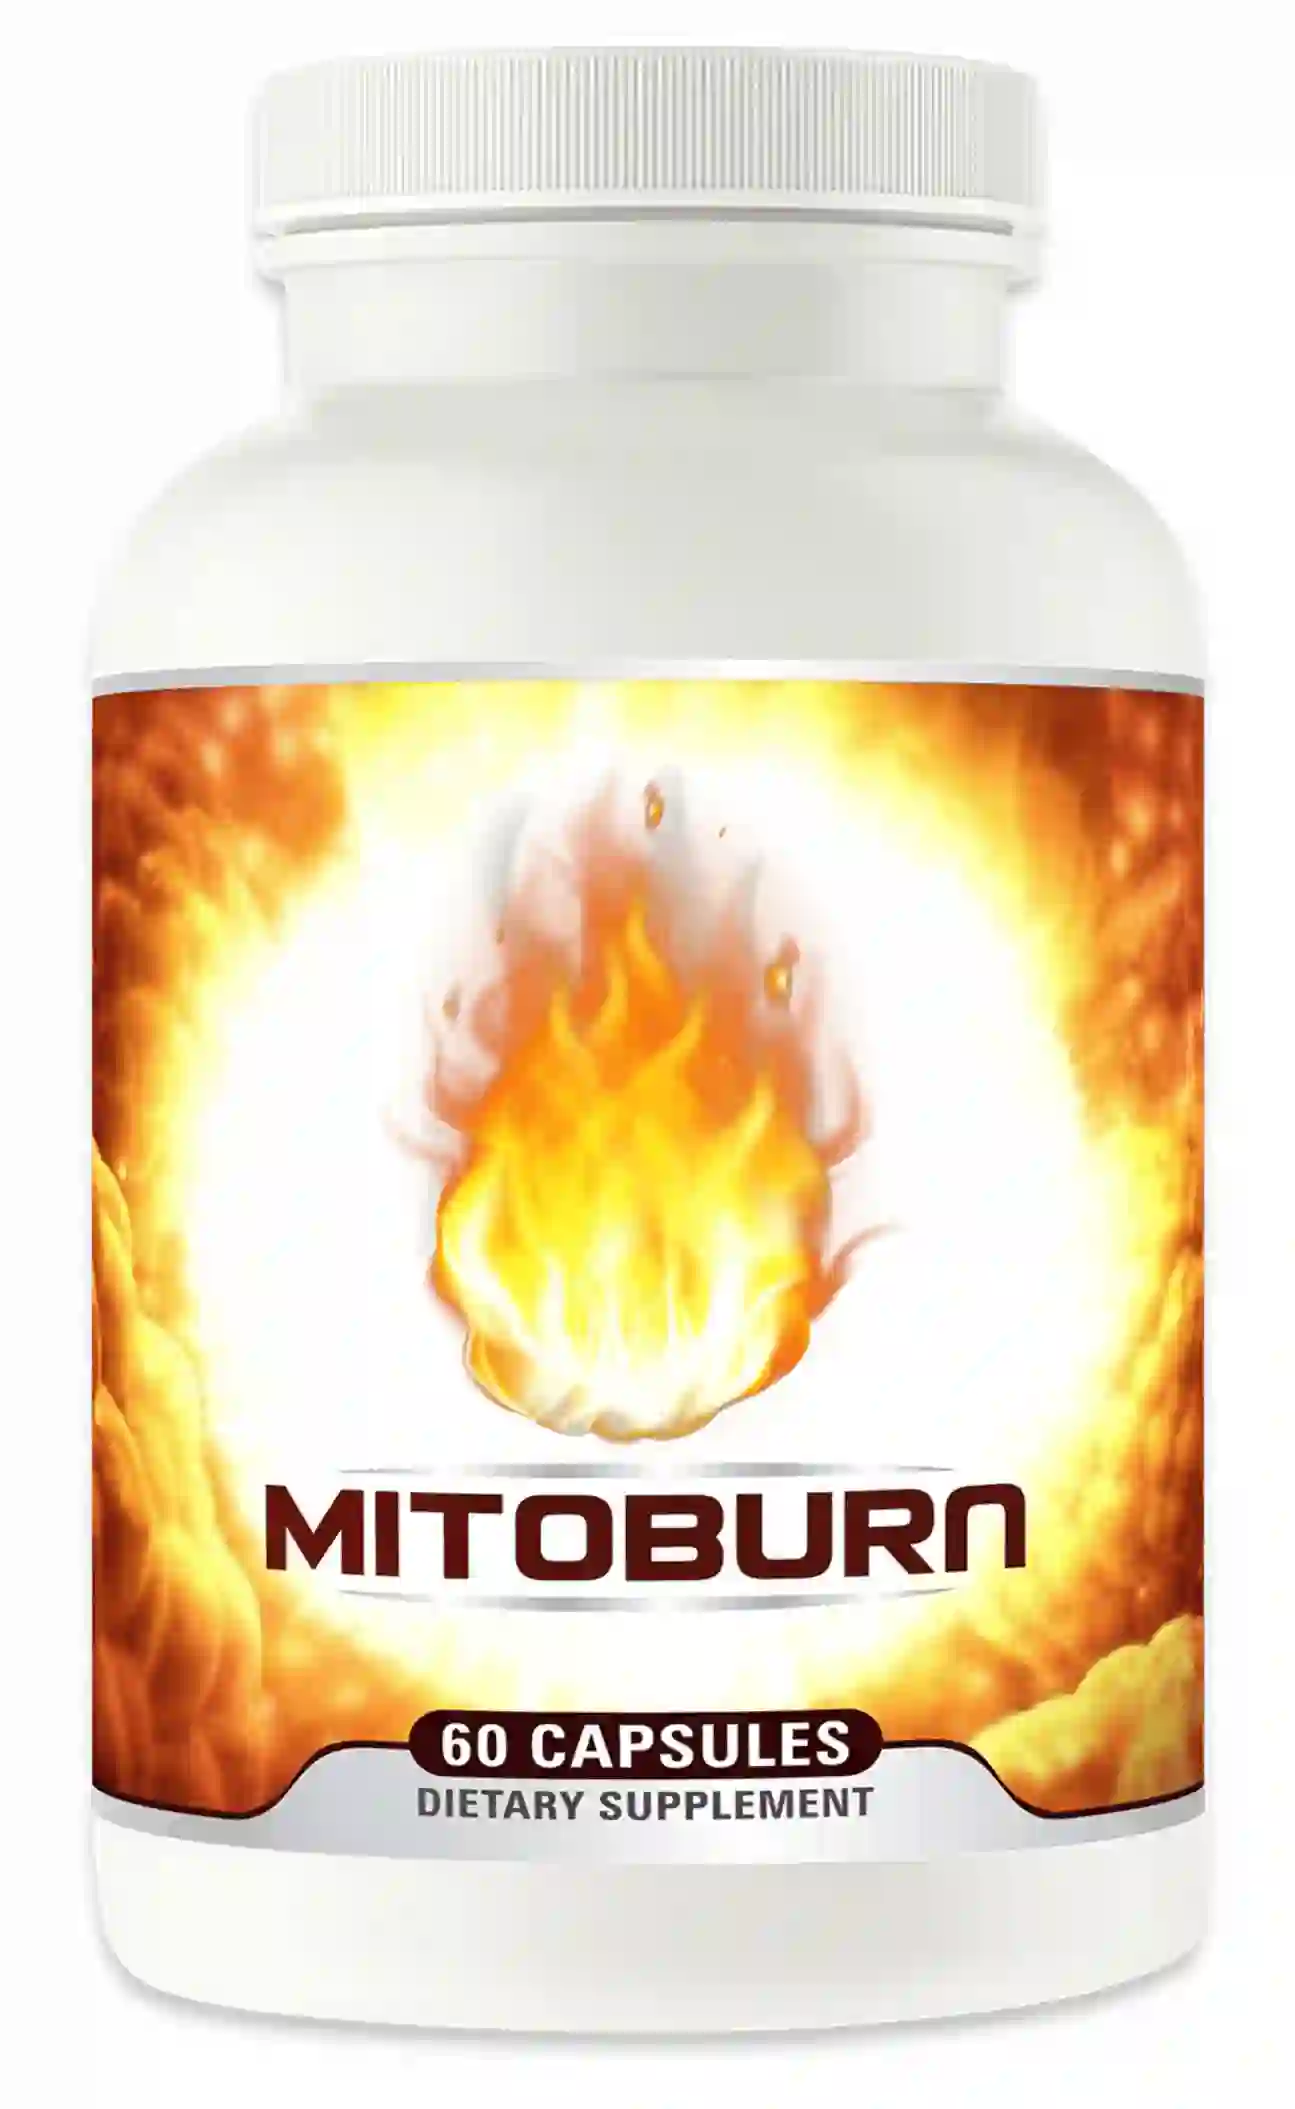 get Mitoburn                                                                                                                                                                                                                                                                                                                                                                                                                                                                                                                                                                                                                                                                                                                                                                                                                                                                                                                                                                                                                                                                                                                                                                                                                                                                                                                                                                                                                                                                                                                                                                                                                                                                               Alpha Tonic                                                            